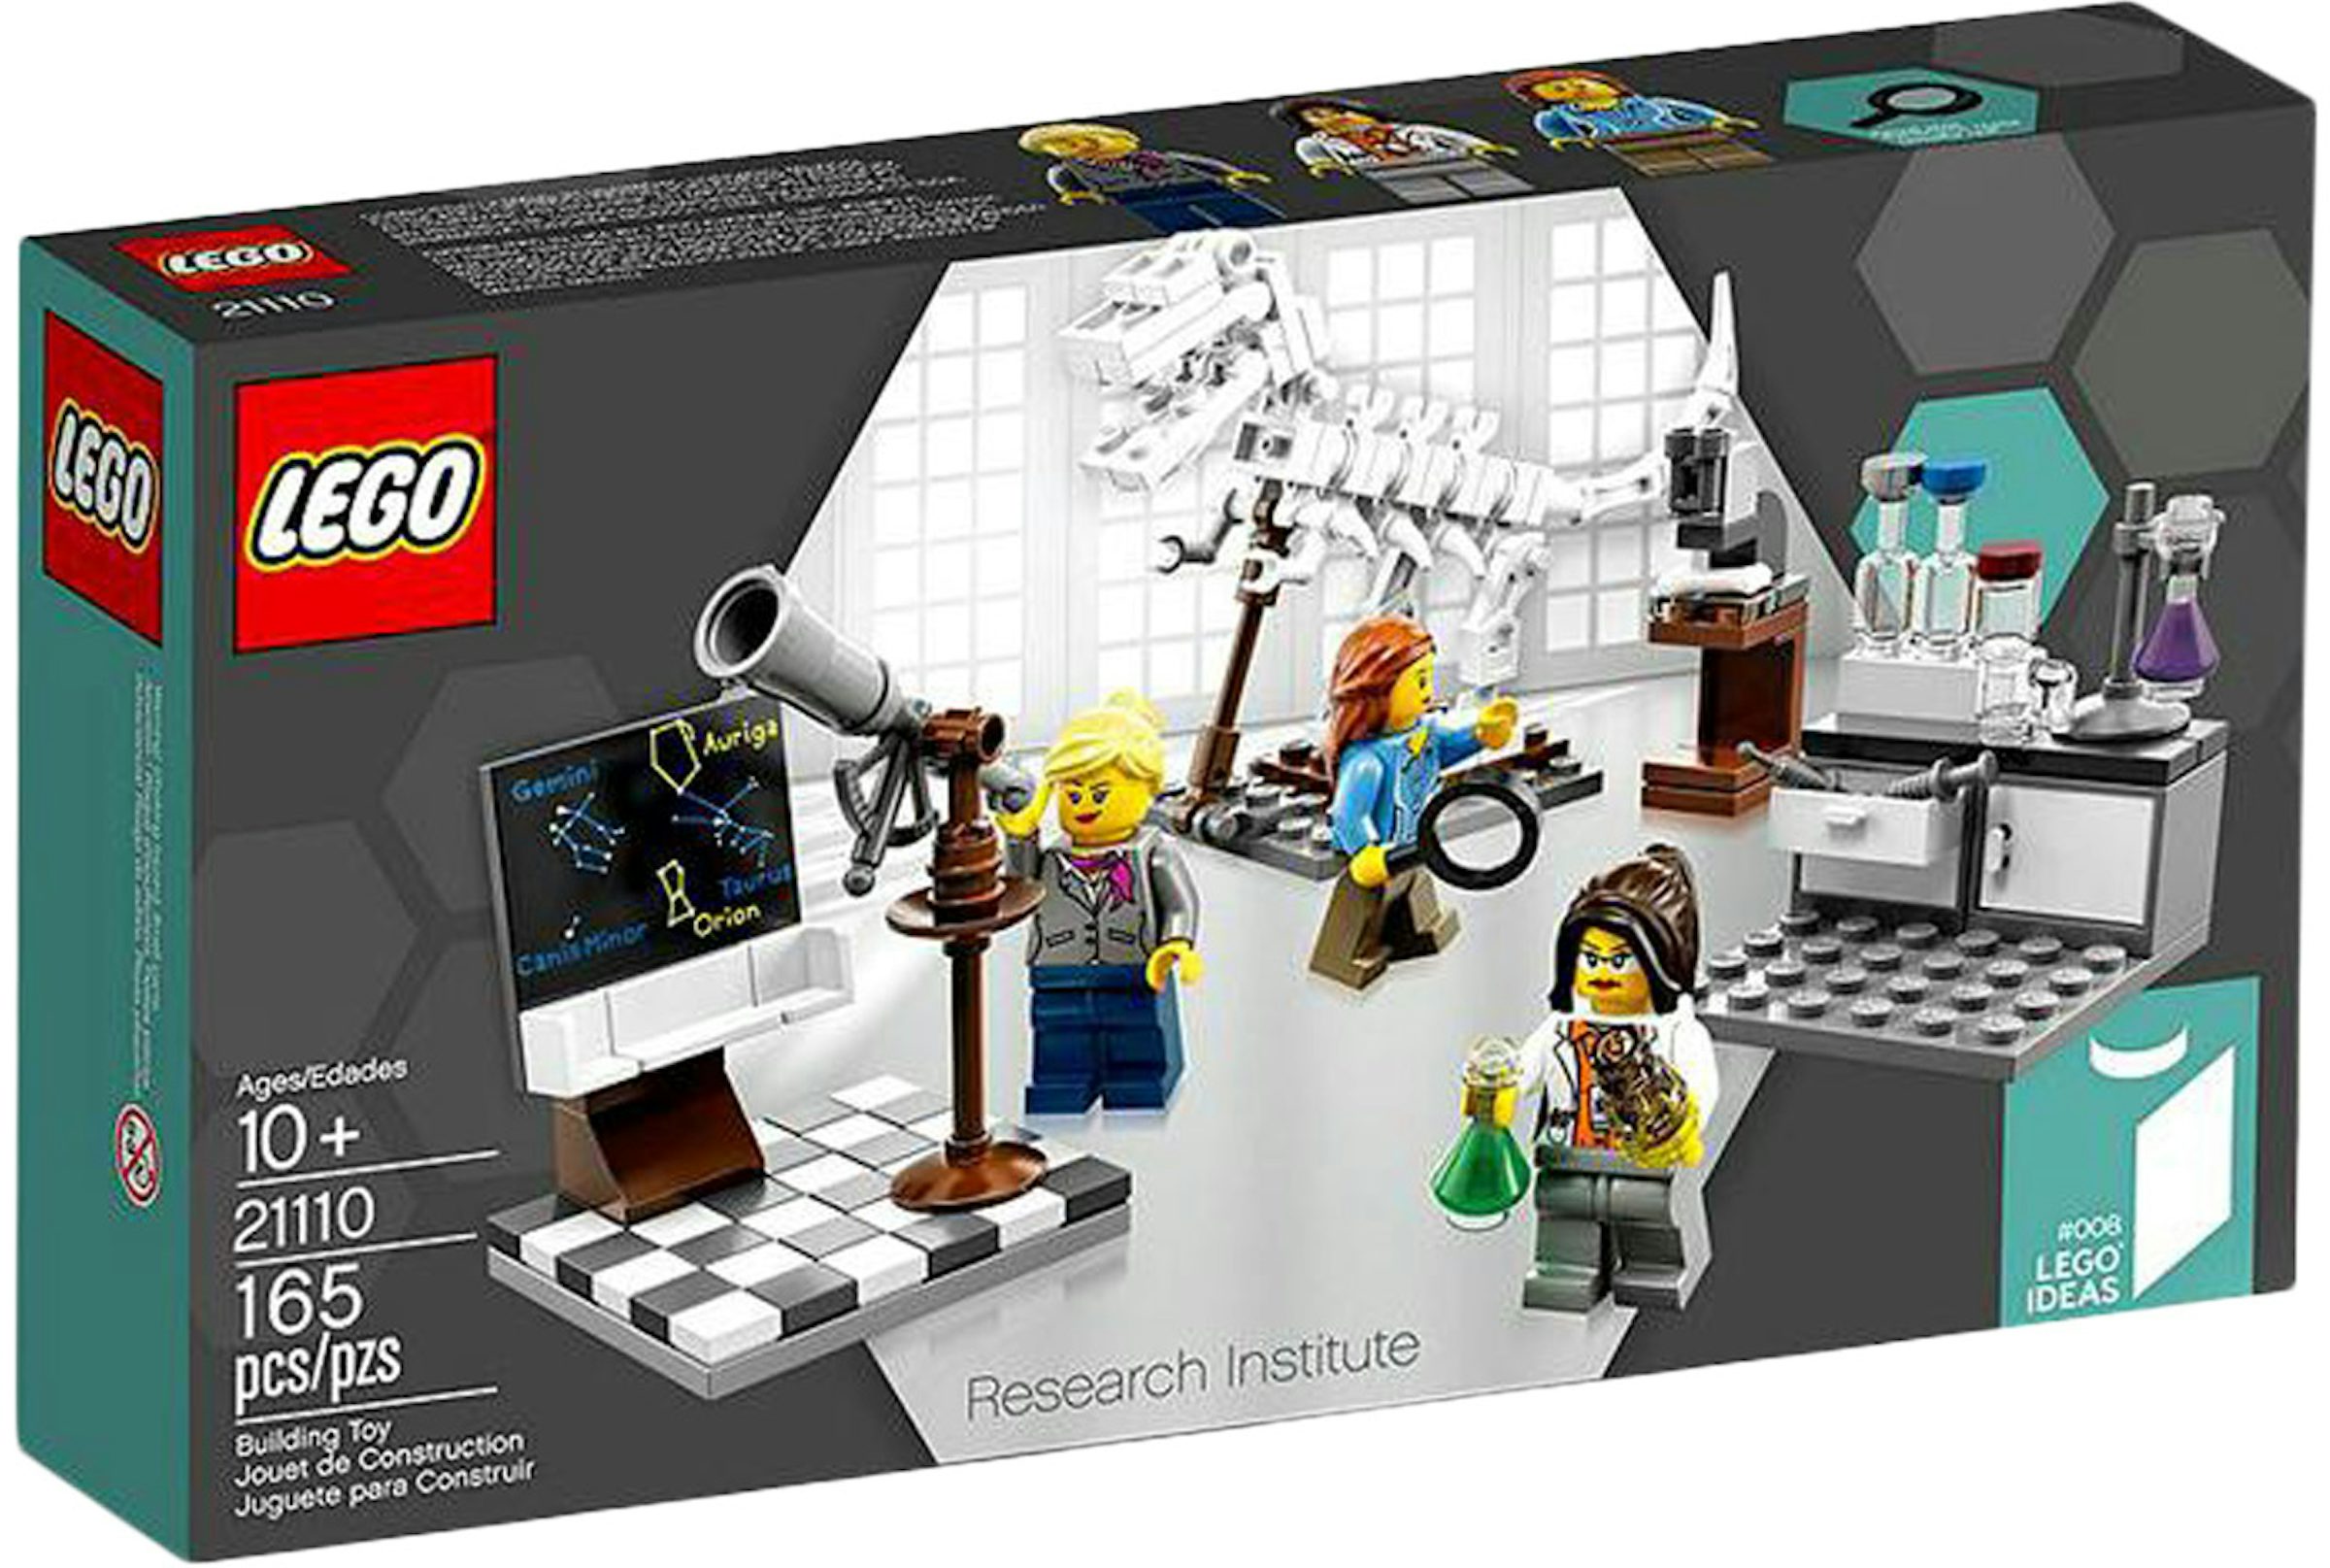 https://images.stockx.com/images/LEGO-Ideas-Research-Institute-Set-21110.jpg?fit=fill&bg=FFFFFF&w=1200&h=857&fm=jpg&auto=compress&dpr=2&trim=color&updated_at=1647883704&q=60